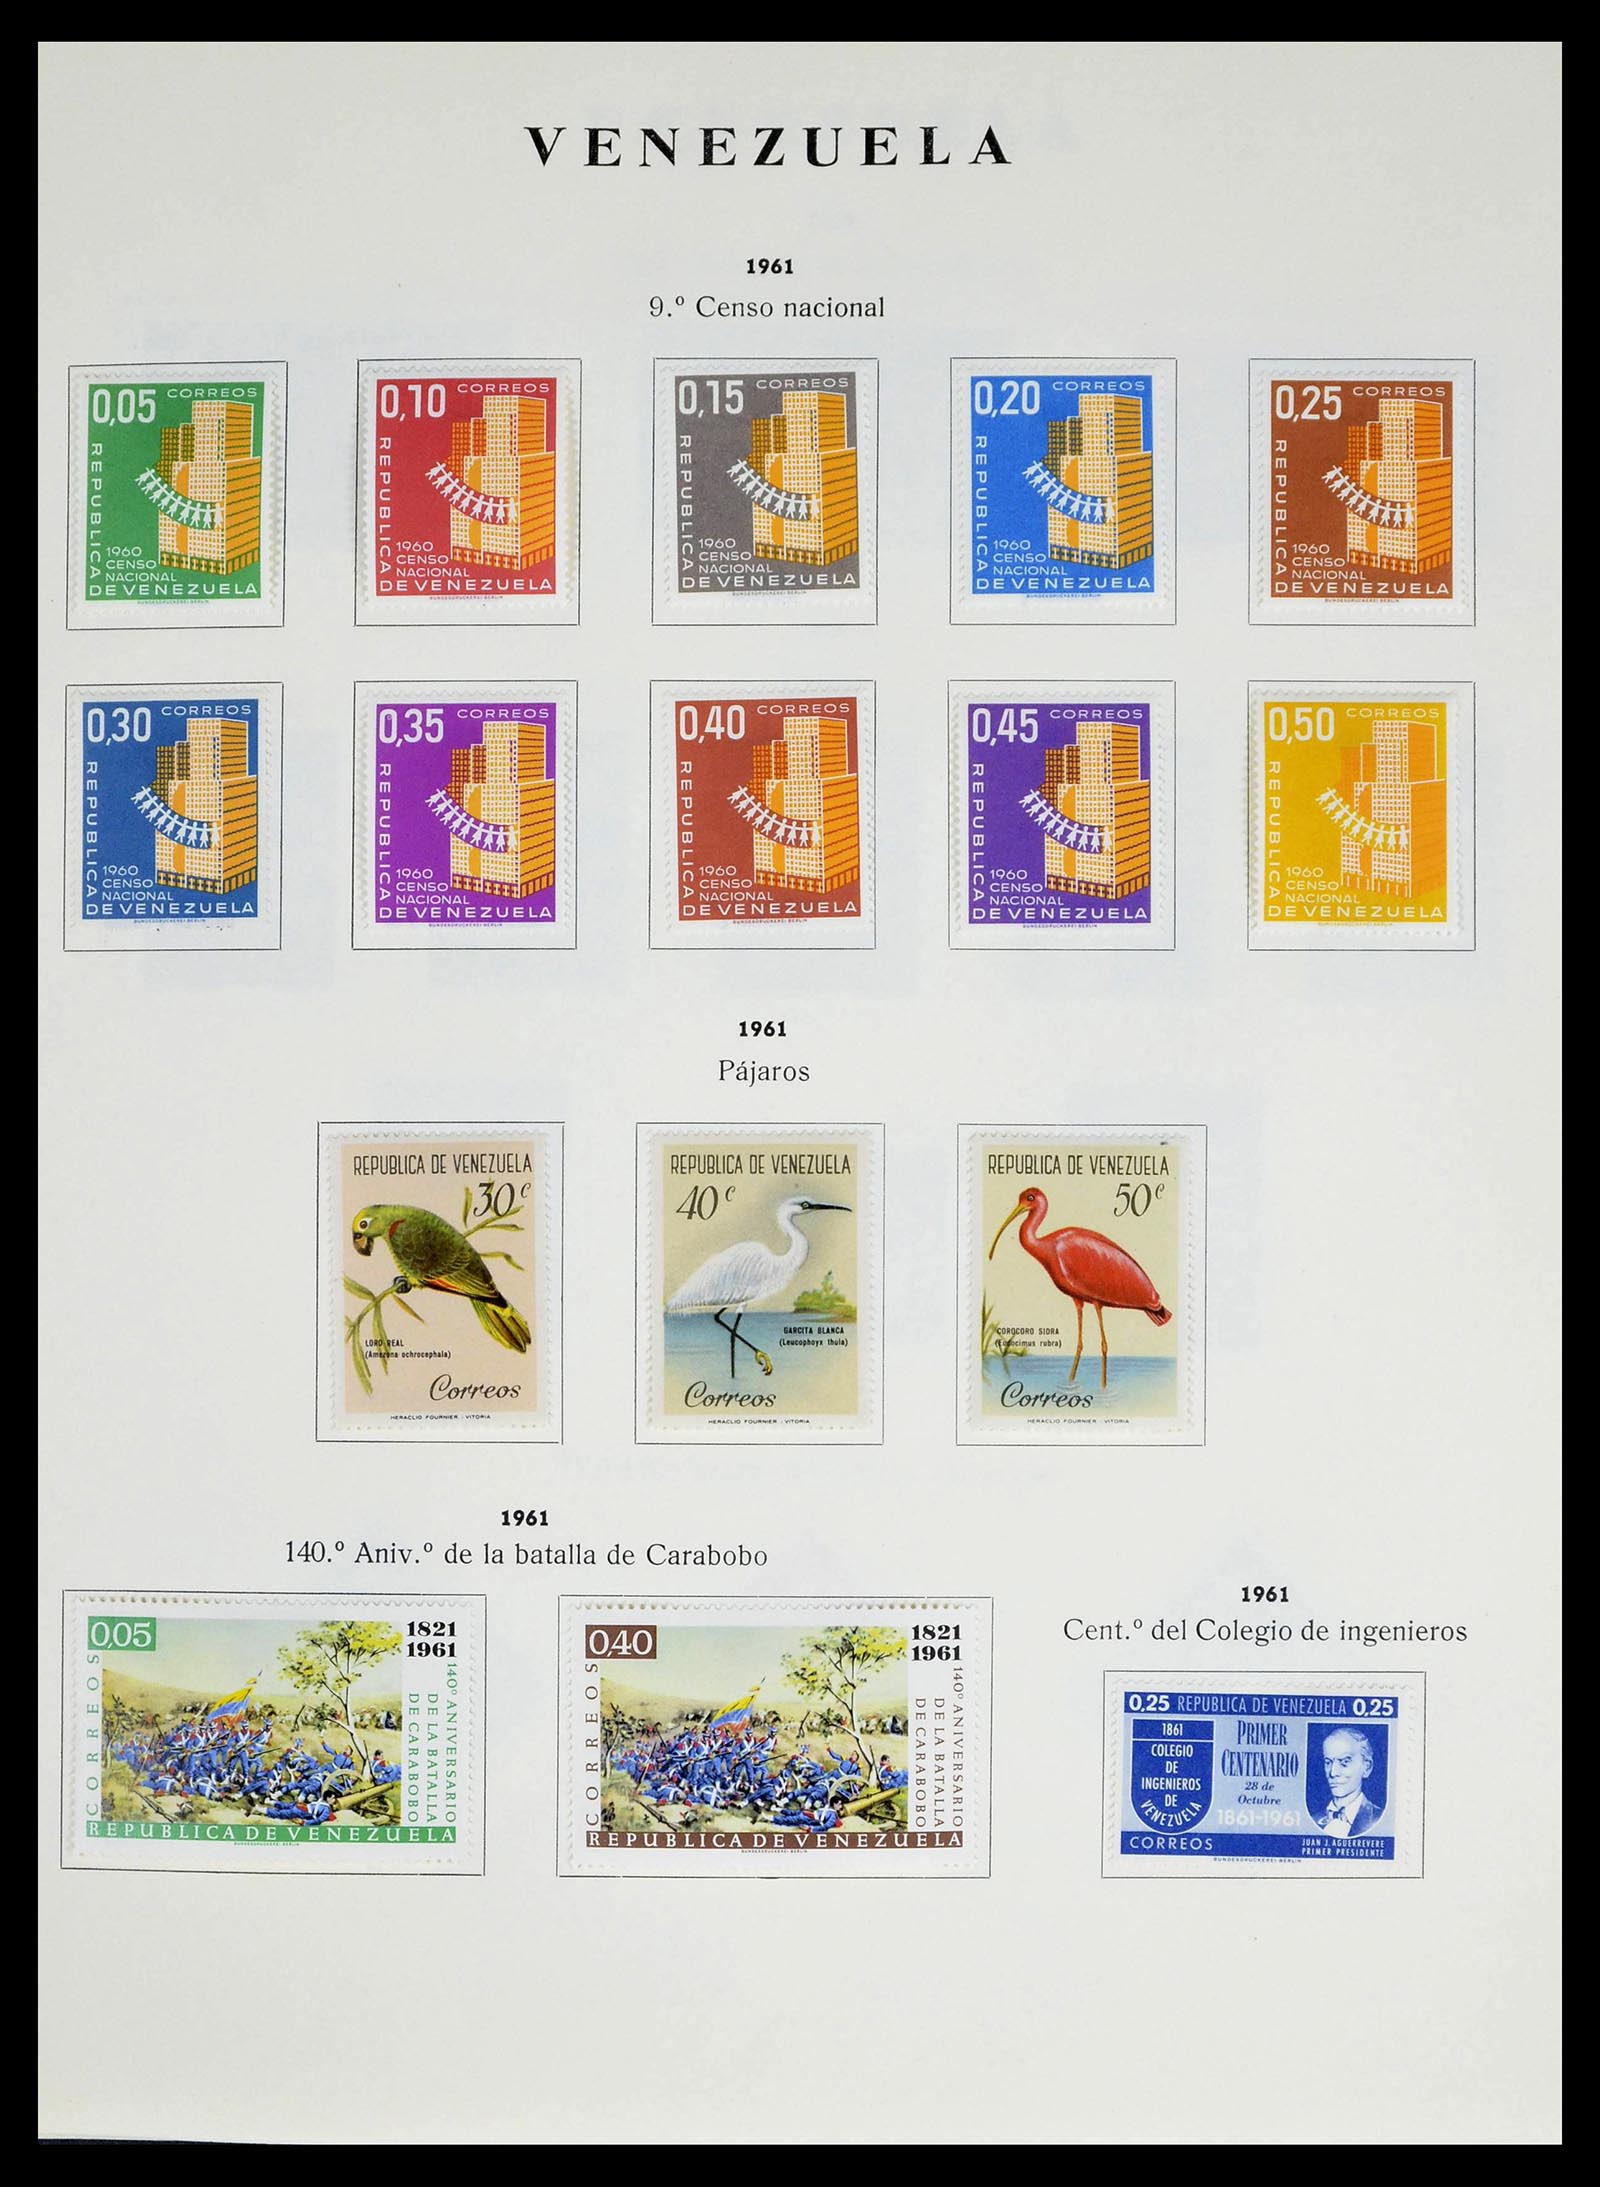 39223 0045 - Stamp collection 39223 Venezuela 1859-1984.